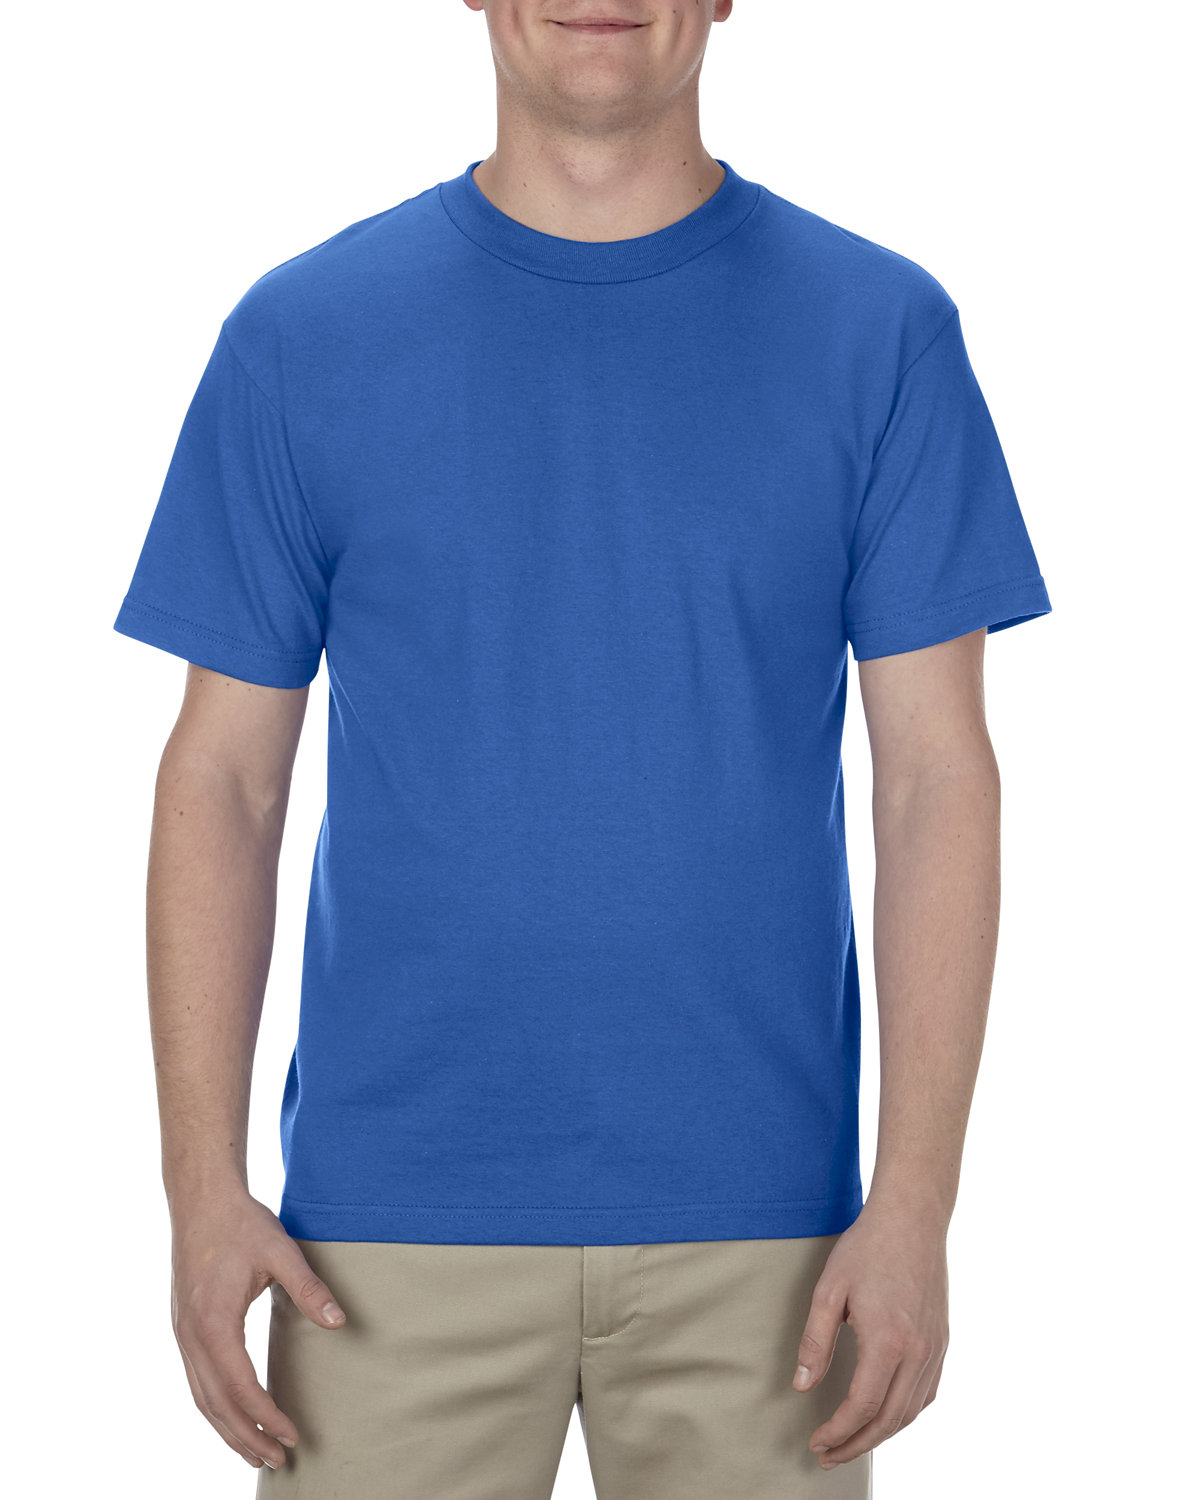 American Apparel Adult 6.0 oz., 100% Cotton T-Shirt ROYAL BLUE 